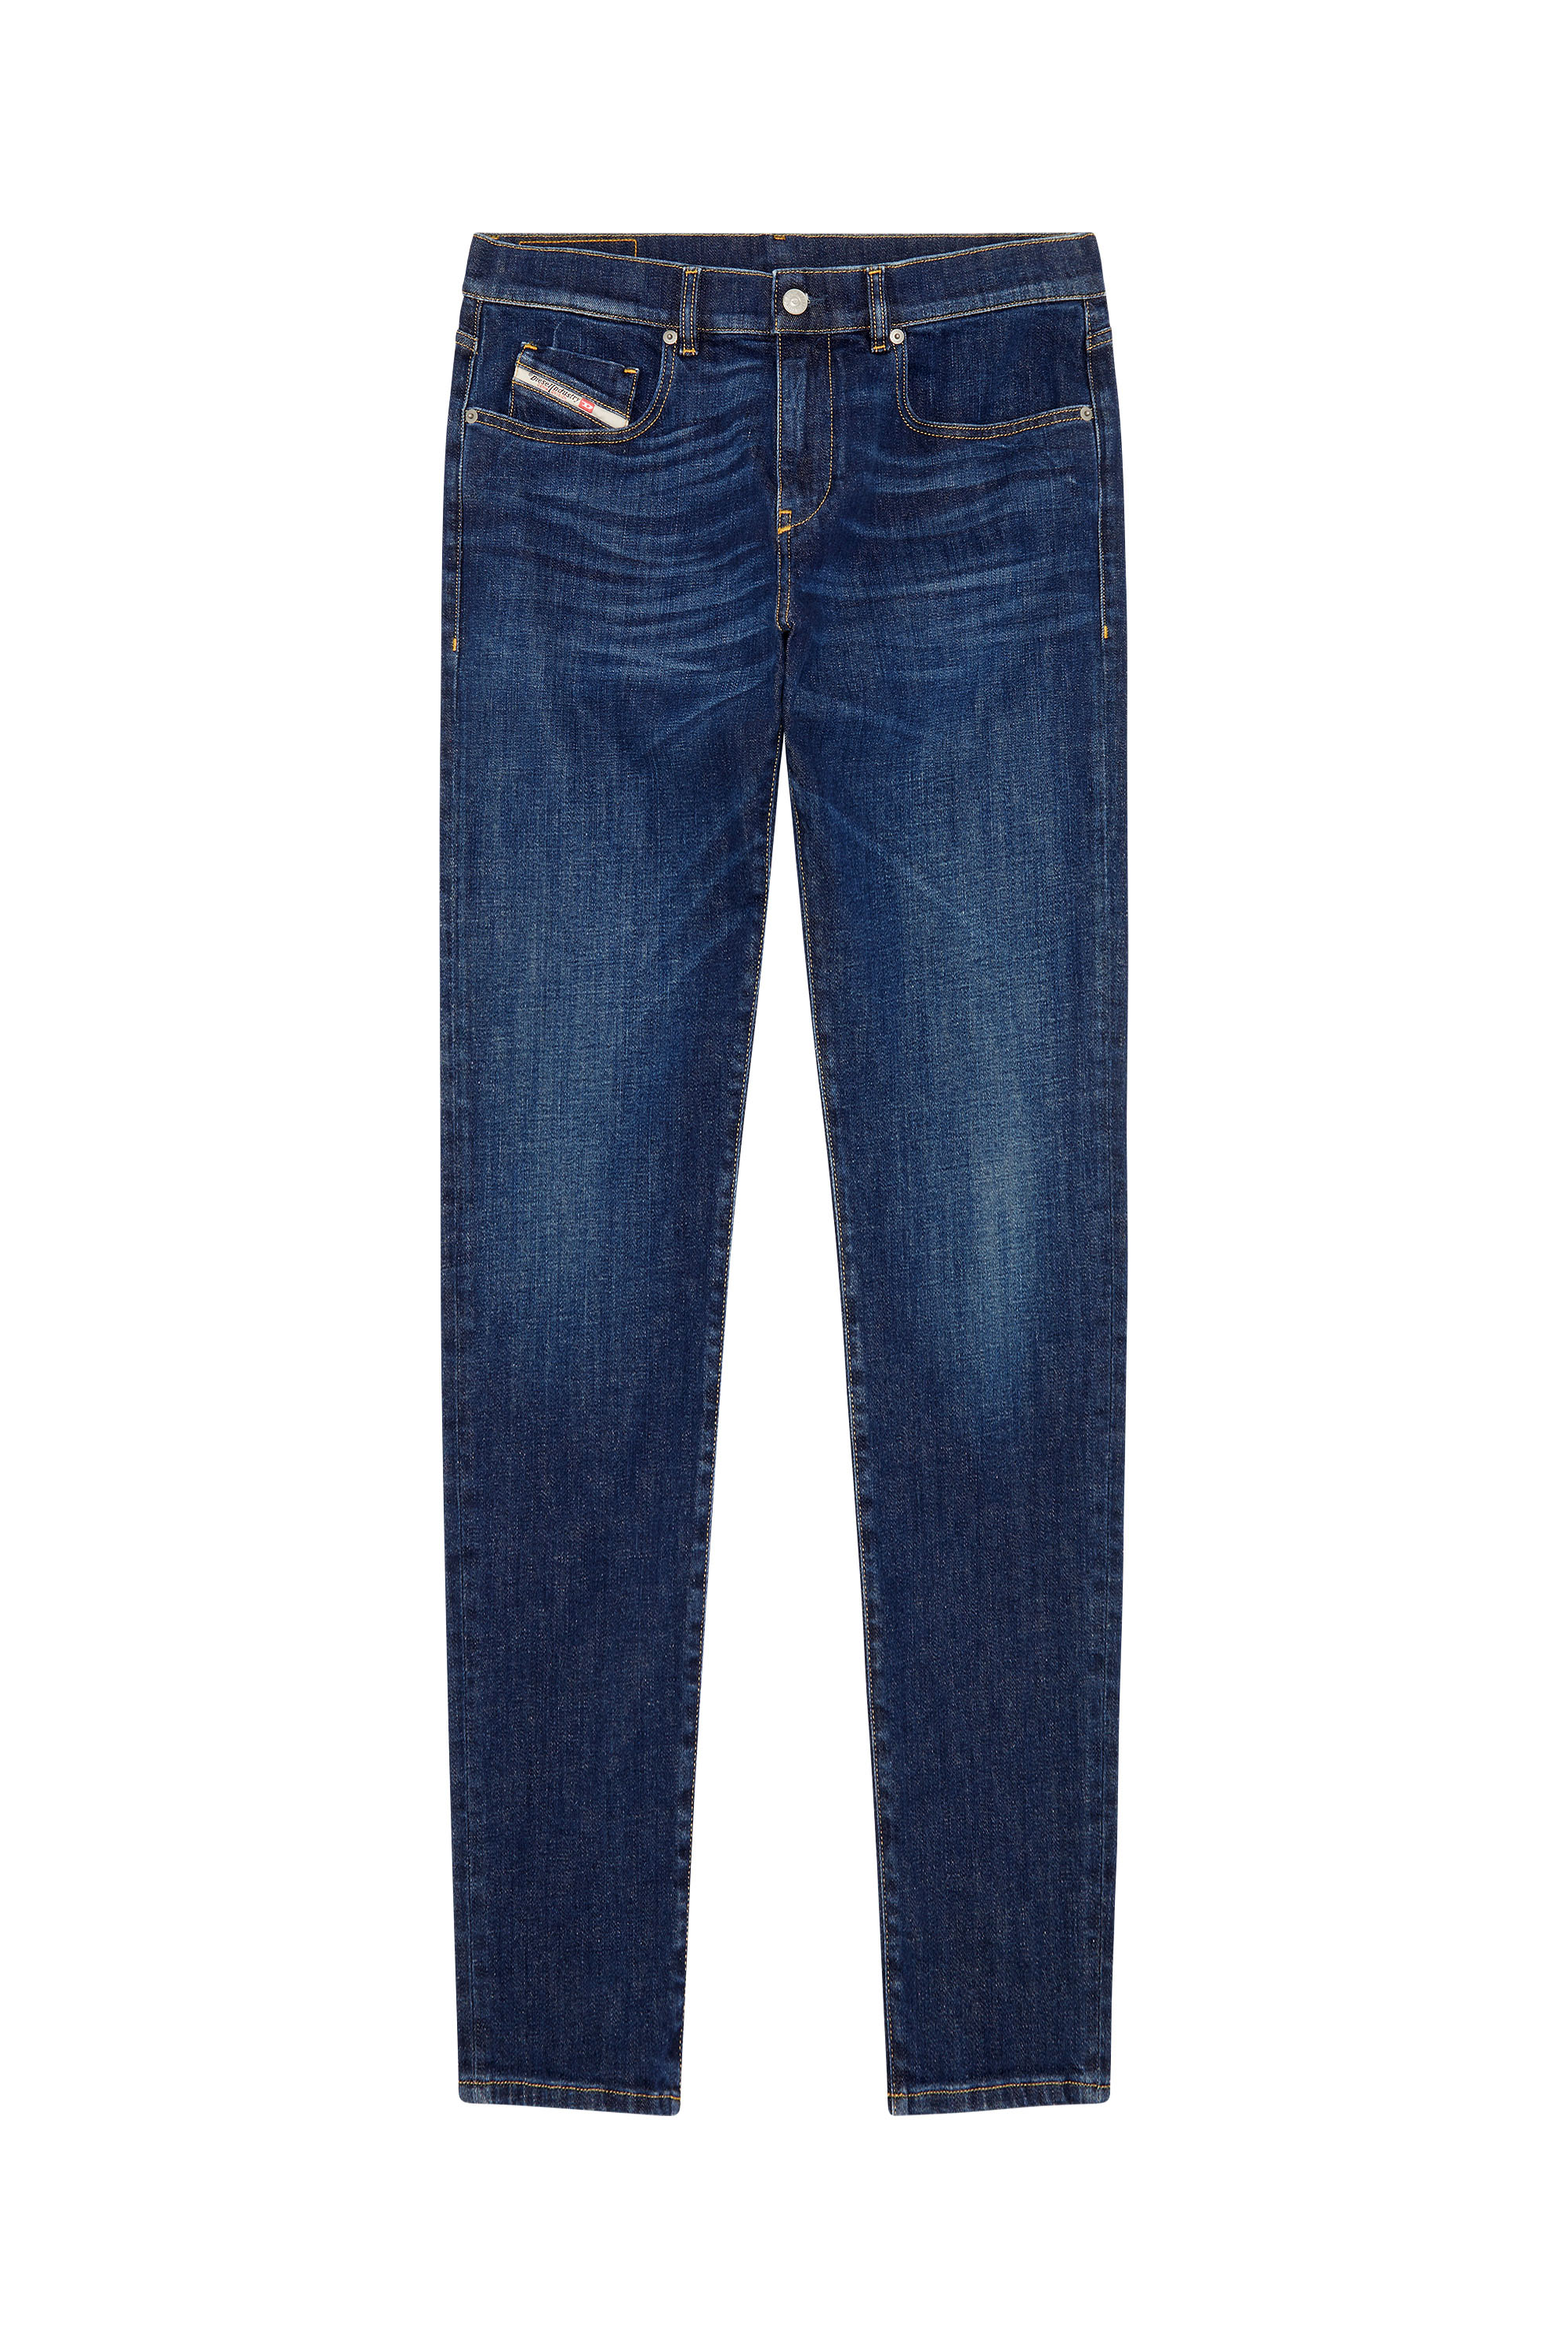 2019 D-Strukt 09B90 Slim Jeans, Dark Blue